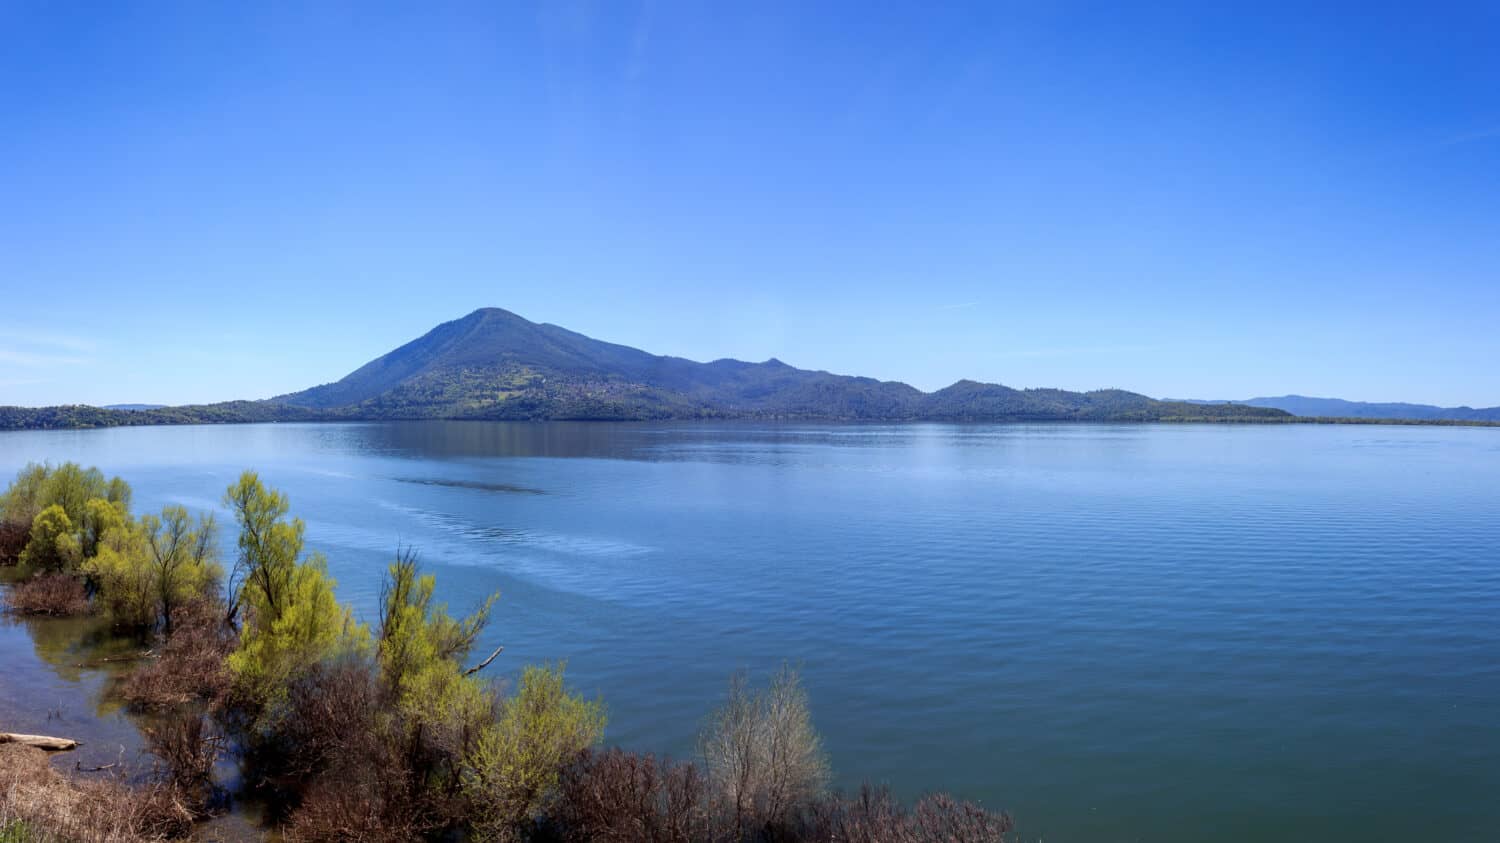 A multi-shot panorama of Mt Konocti overlooking Clear Lake, California, USA